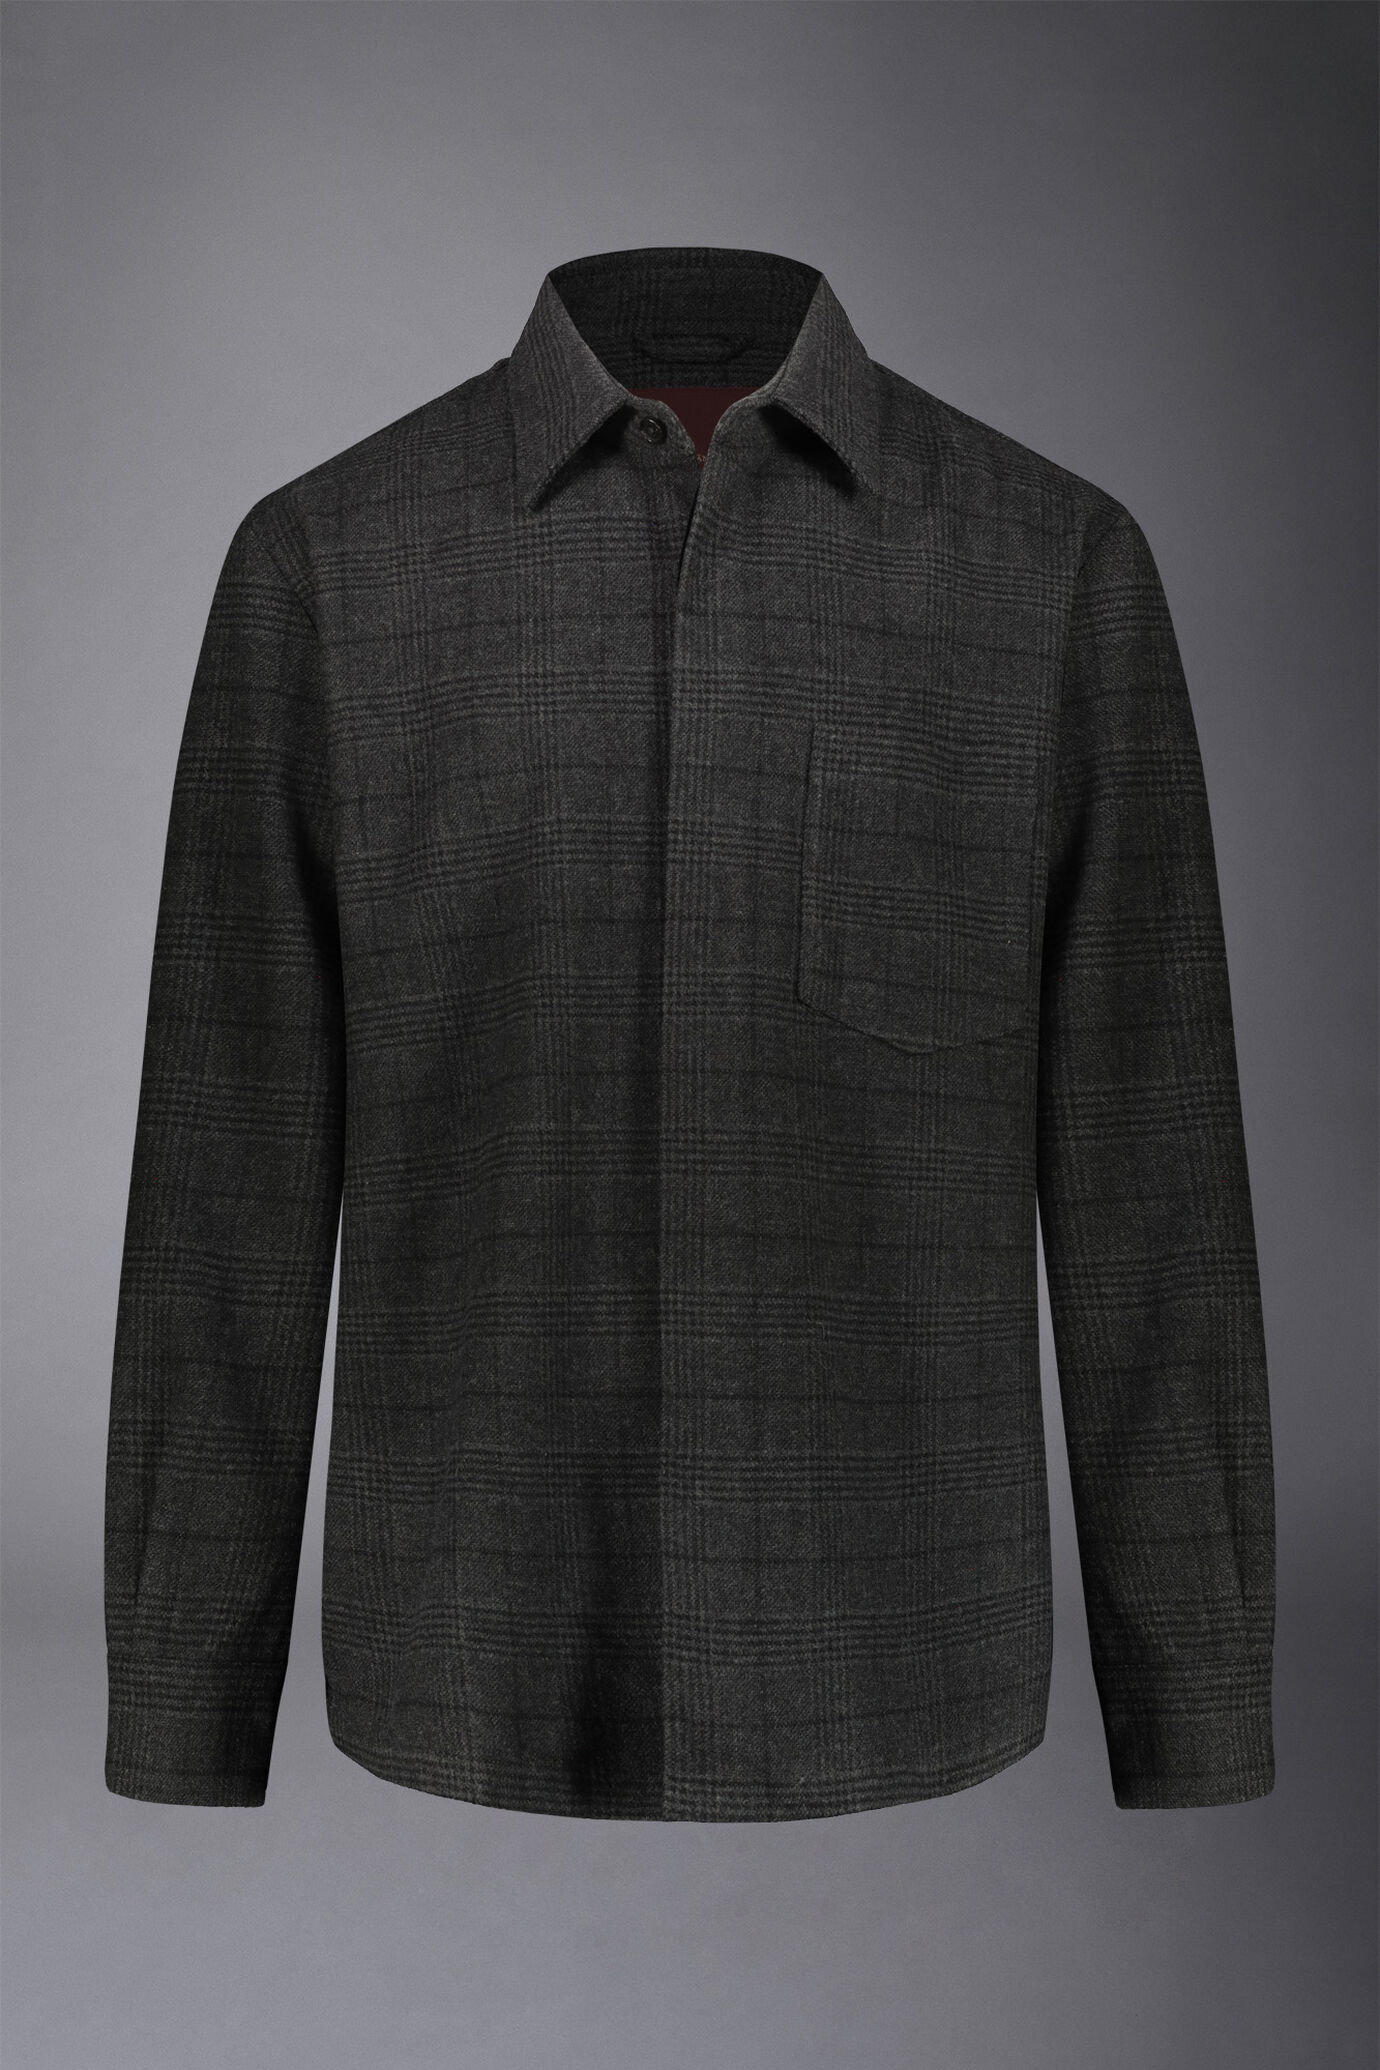 Men's shirt jacket wool blend checked fabric regular fit image number 4